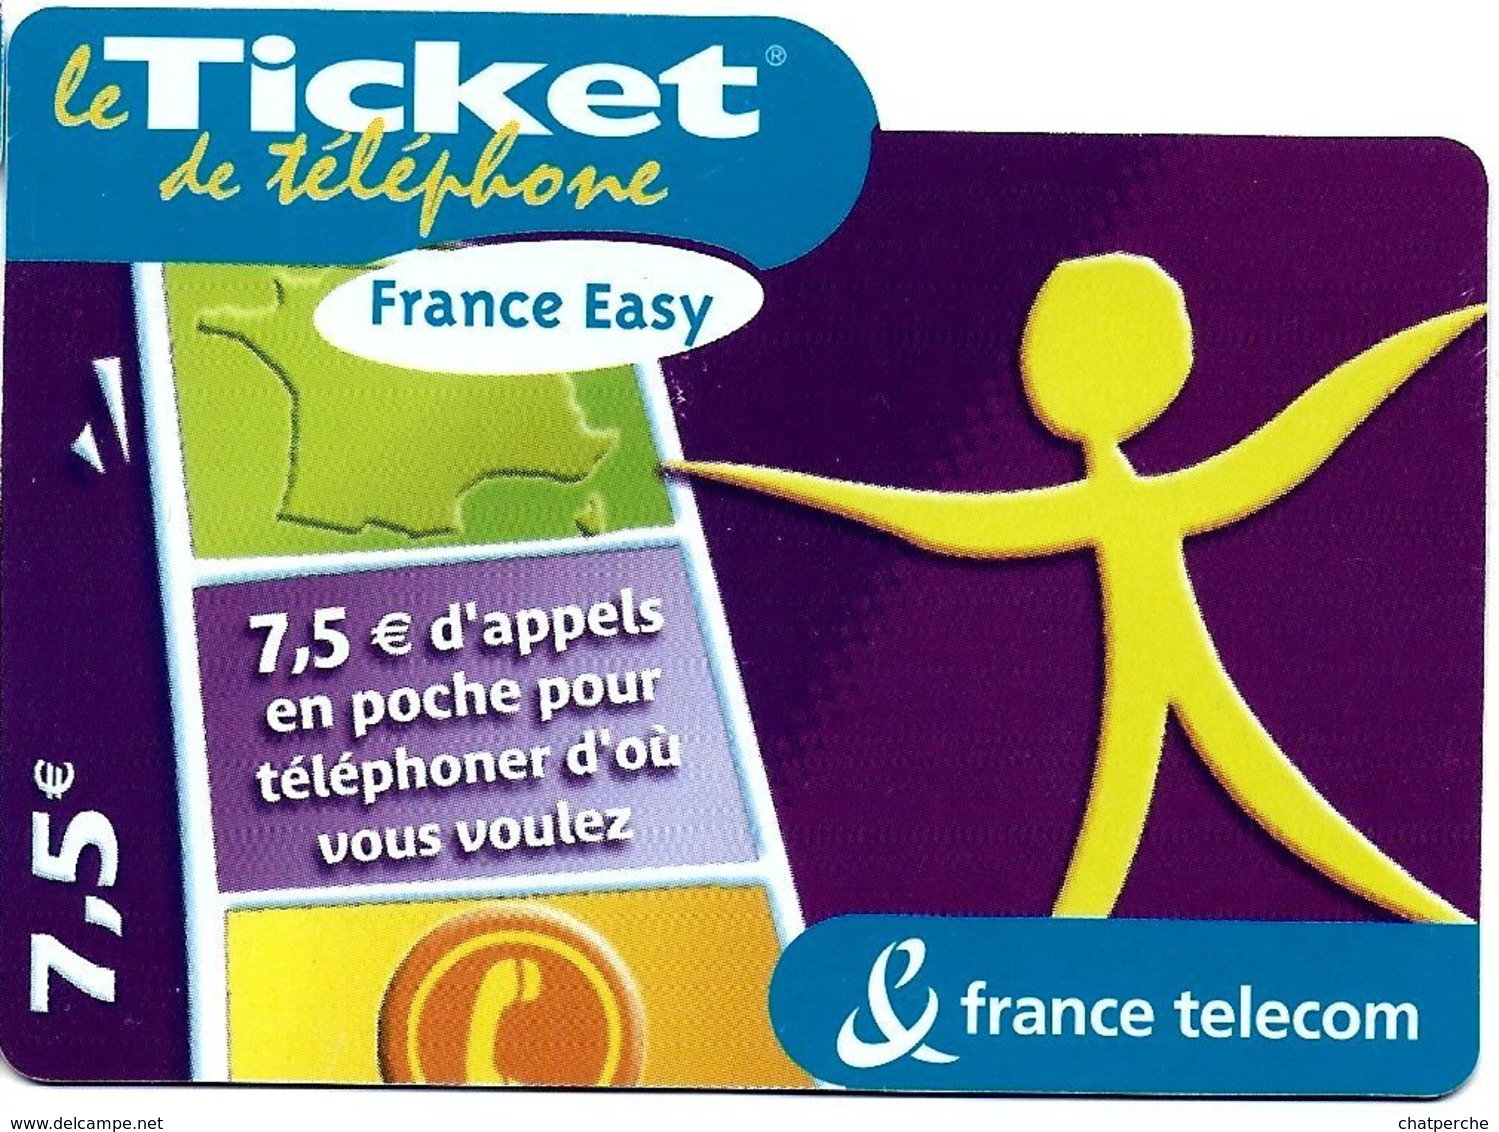 TICKET FRANCE TELECOM FRANCE EASY 7.5 €UROS - Tickets FT